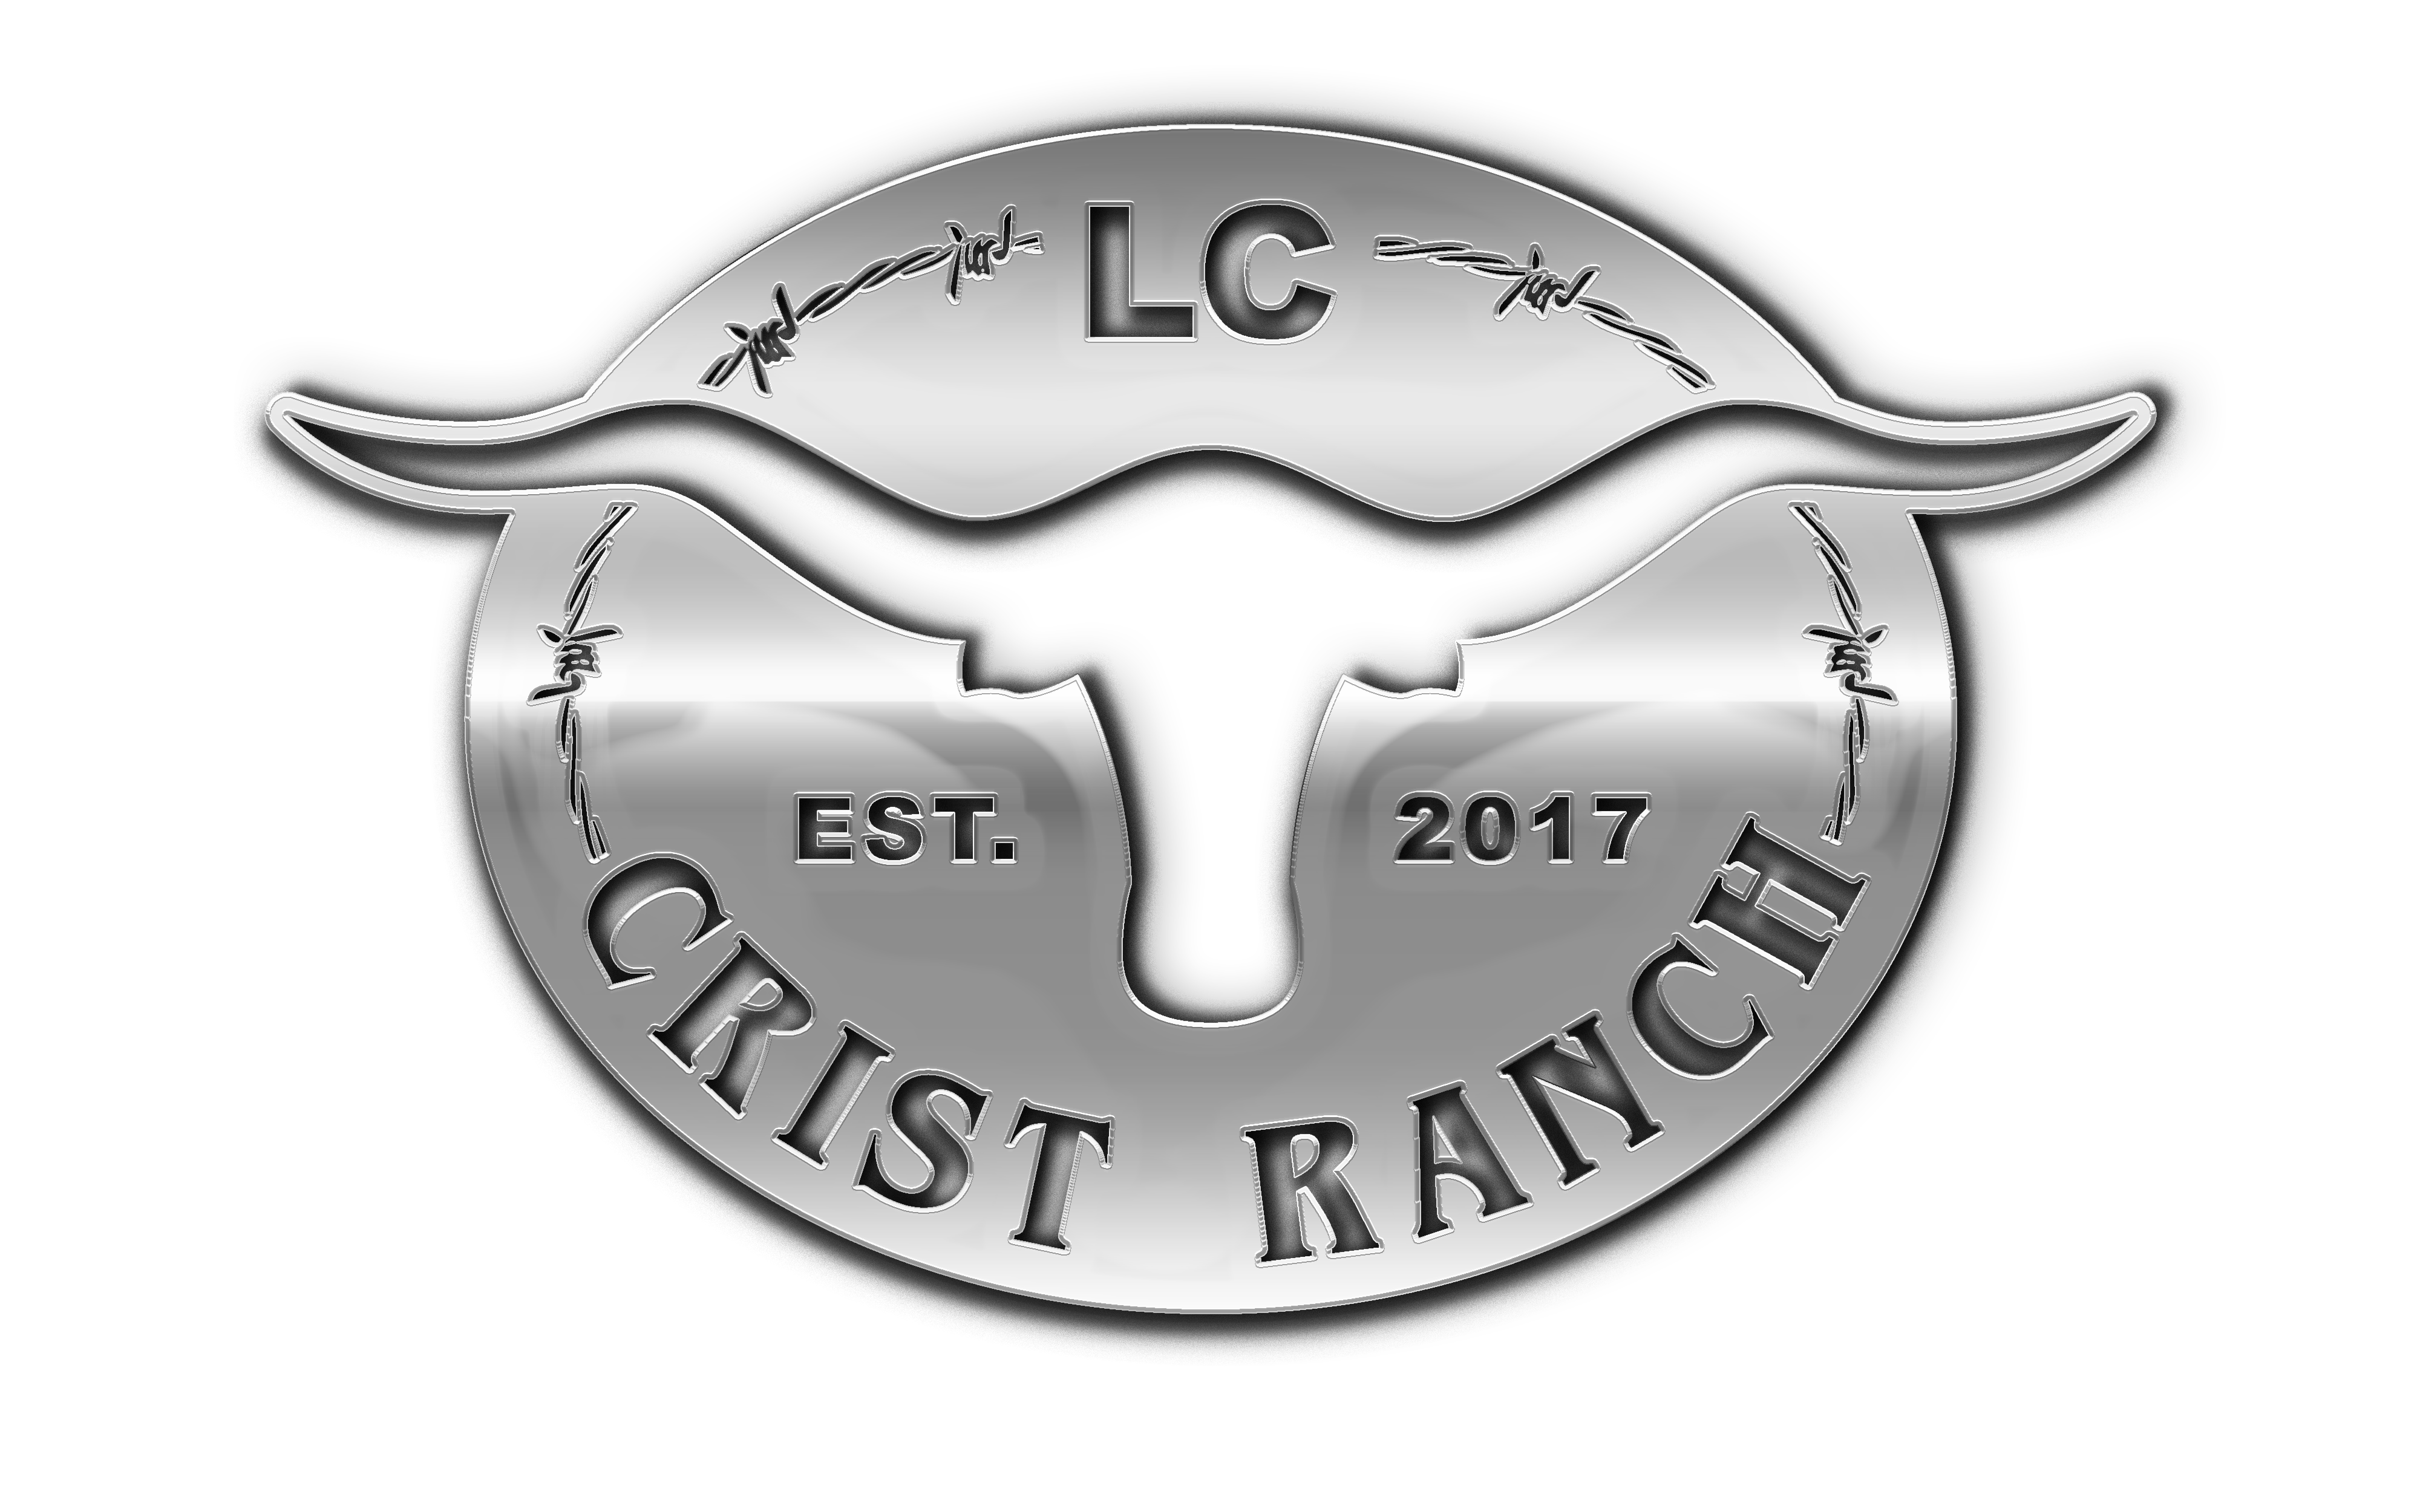 Crist Ranch logo